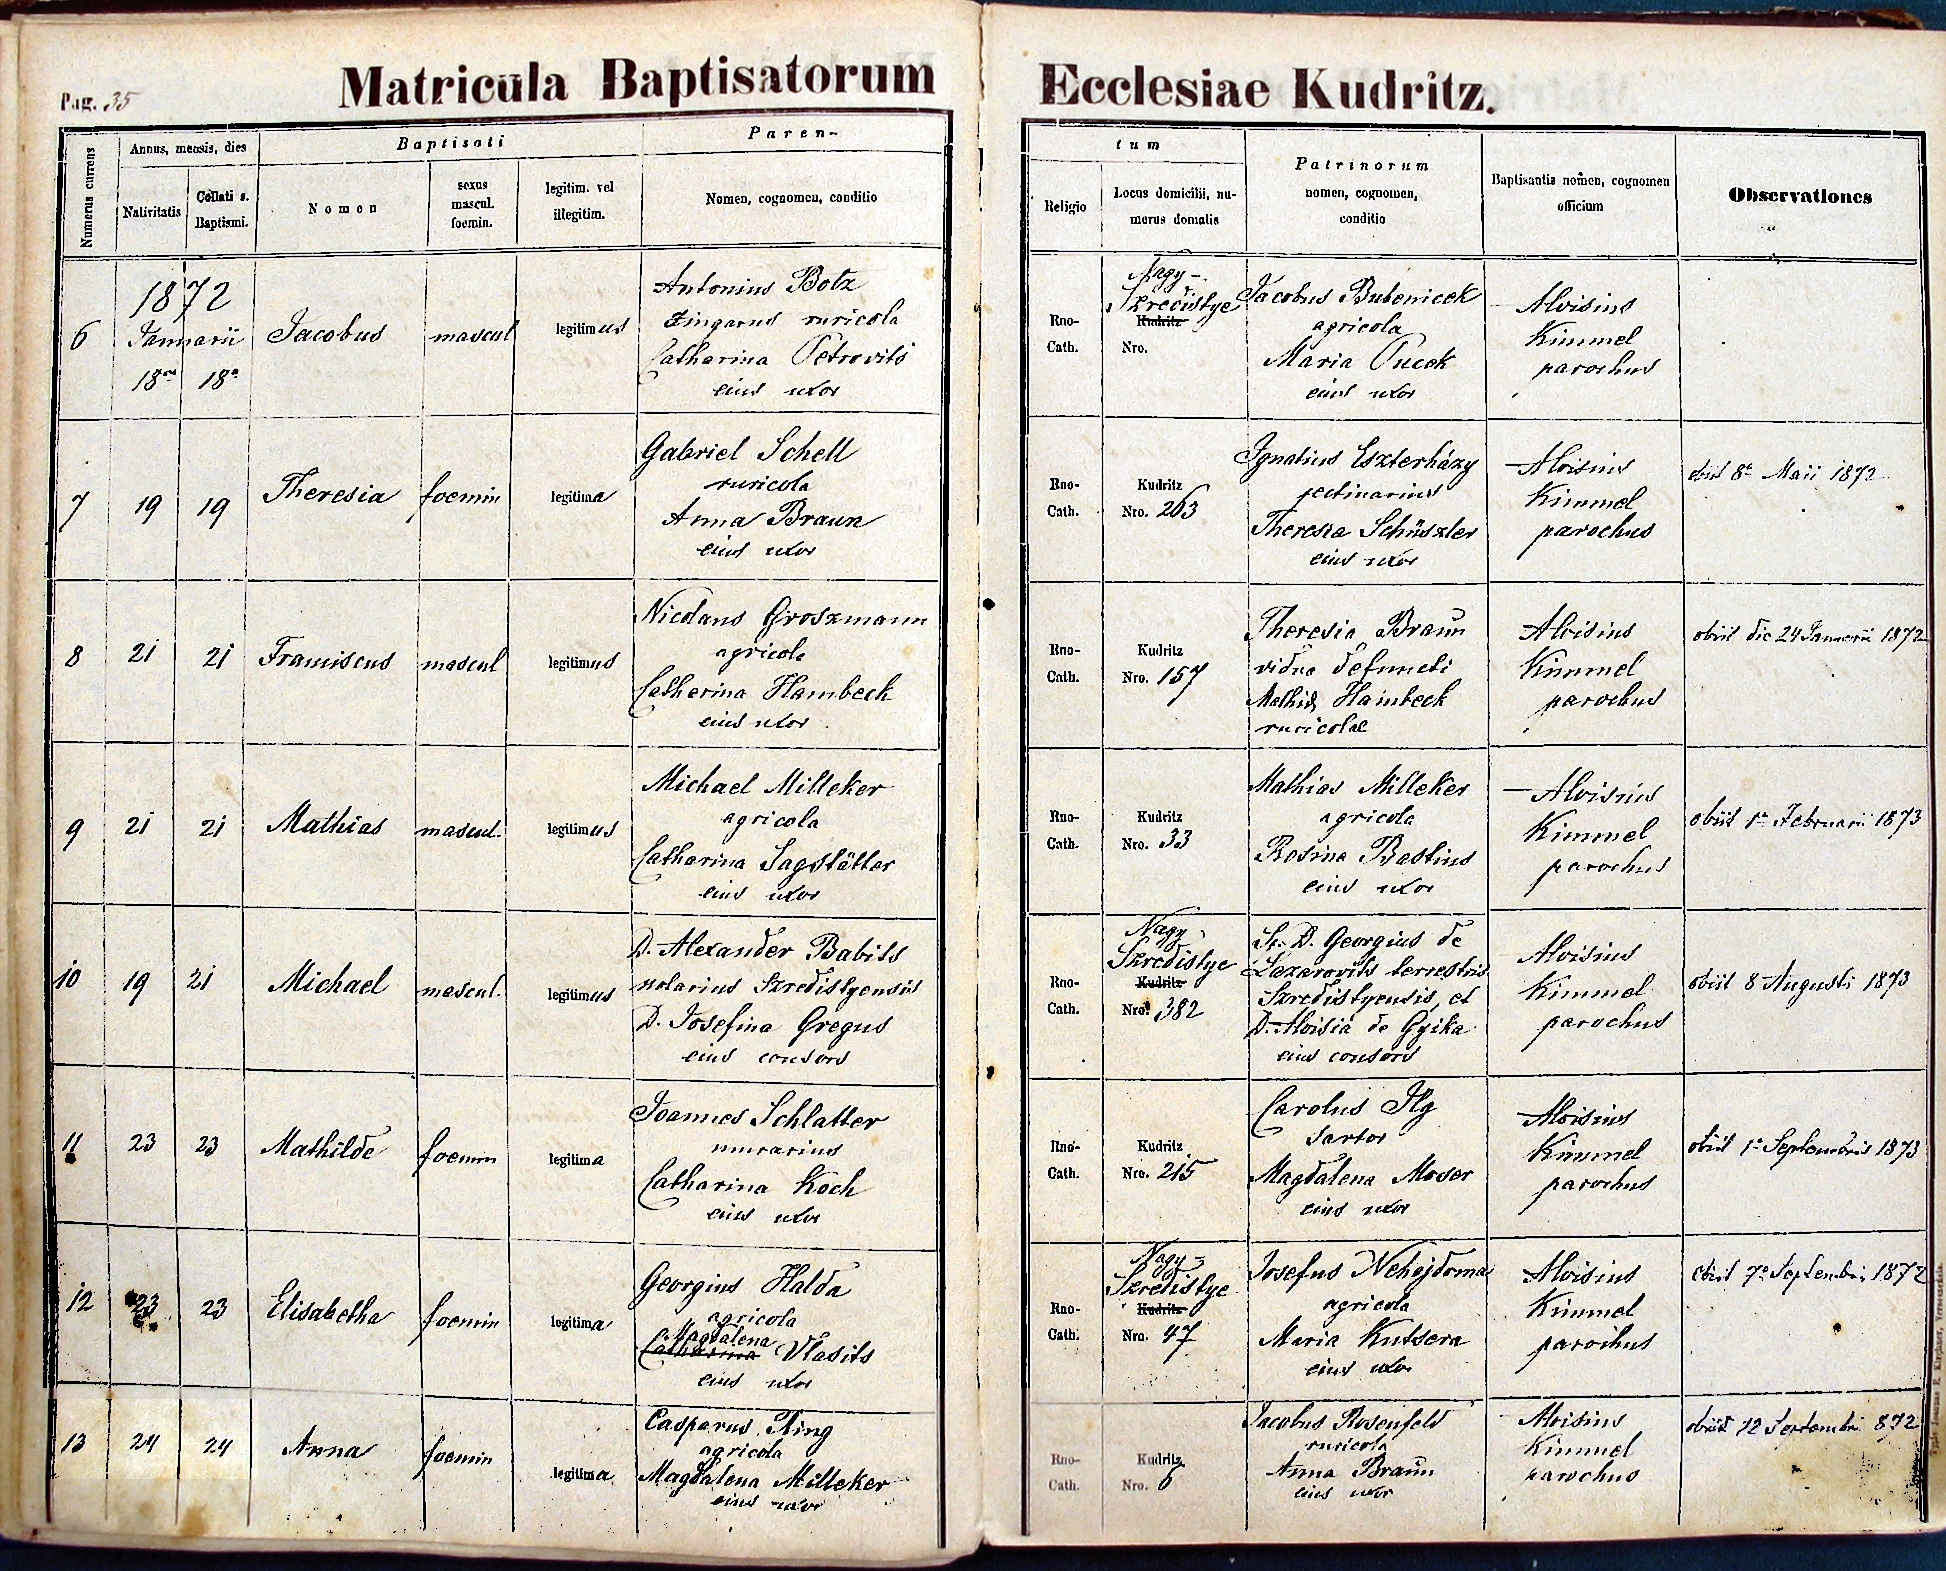 images/church_records/BIRTHS/1884-1899B/1885/035